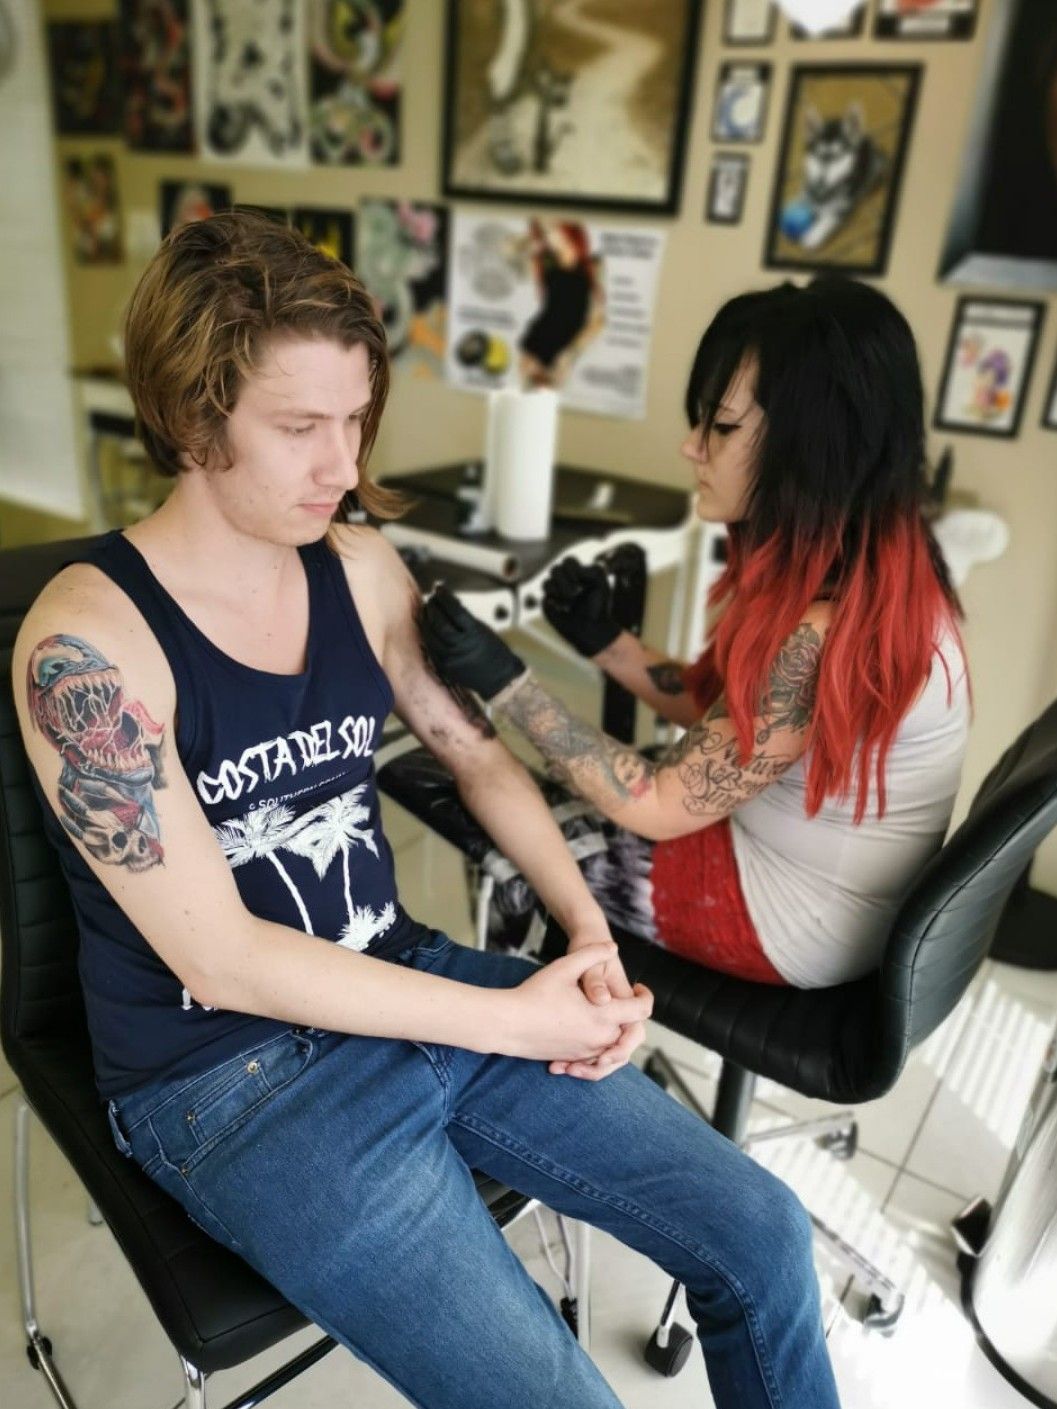 Artist tattoos craft in Rockies  News Sports Jobs  Tribune Chronicle